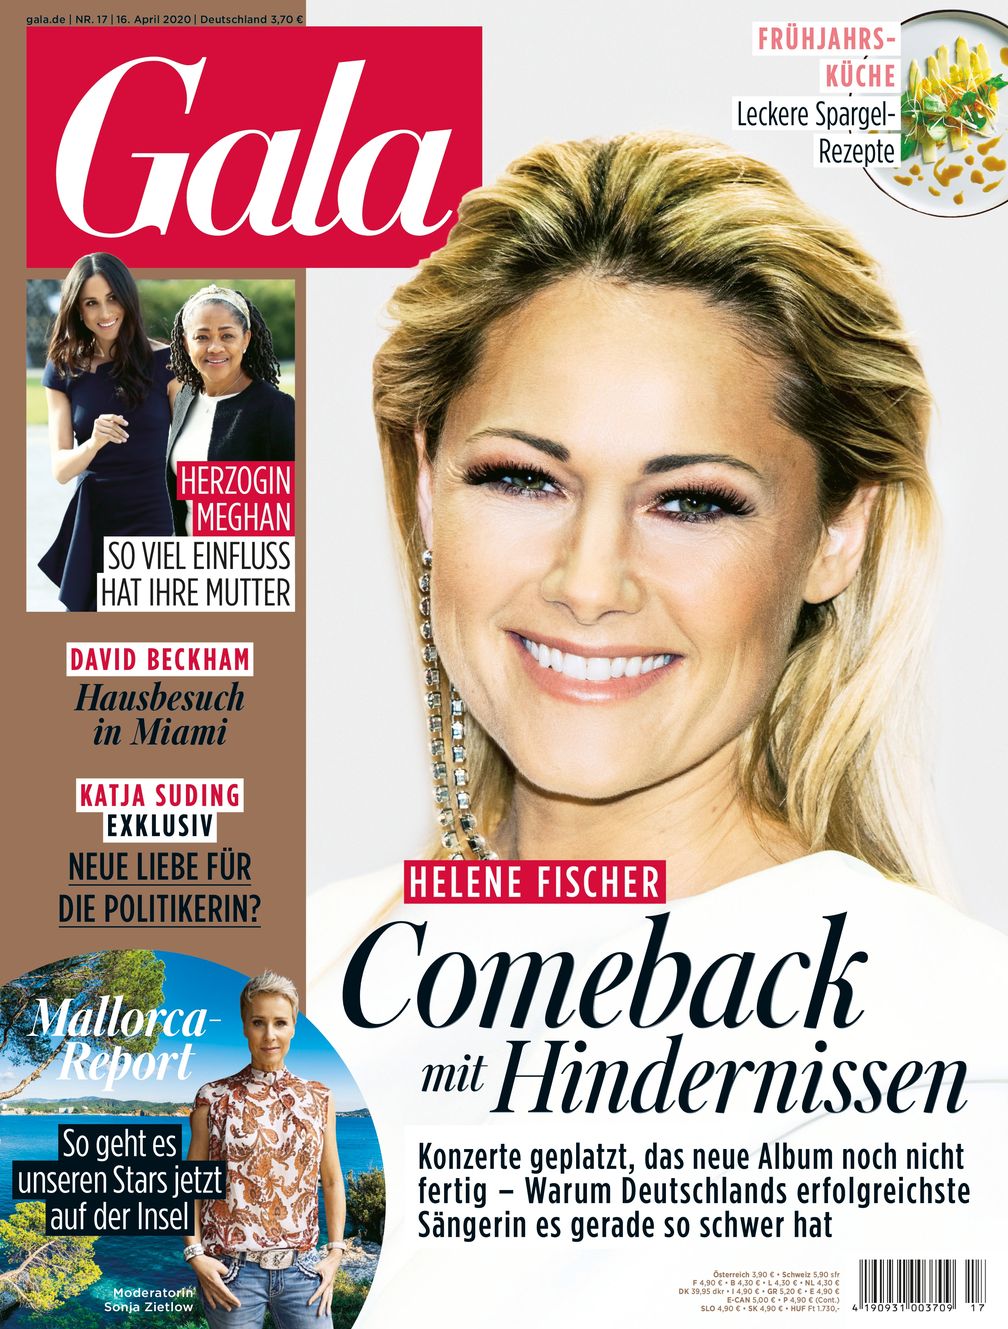 GALA Cover 17/20 (EVT: 16. April 2020).  Bild: "obs/Gruner+Jahr, Gala"